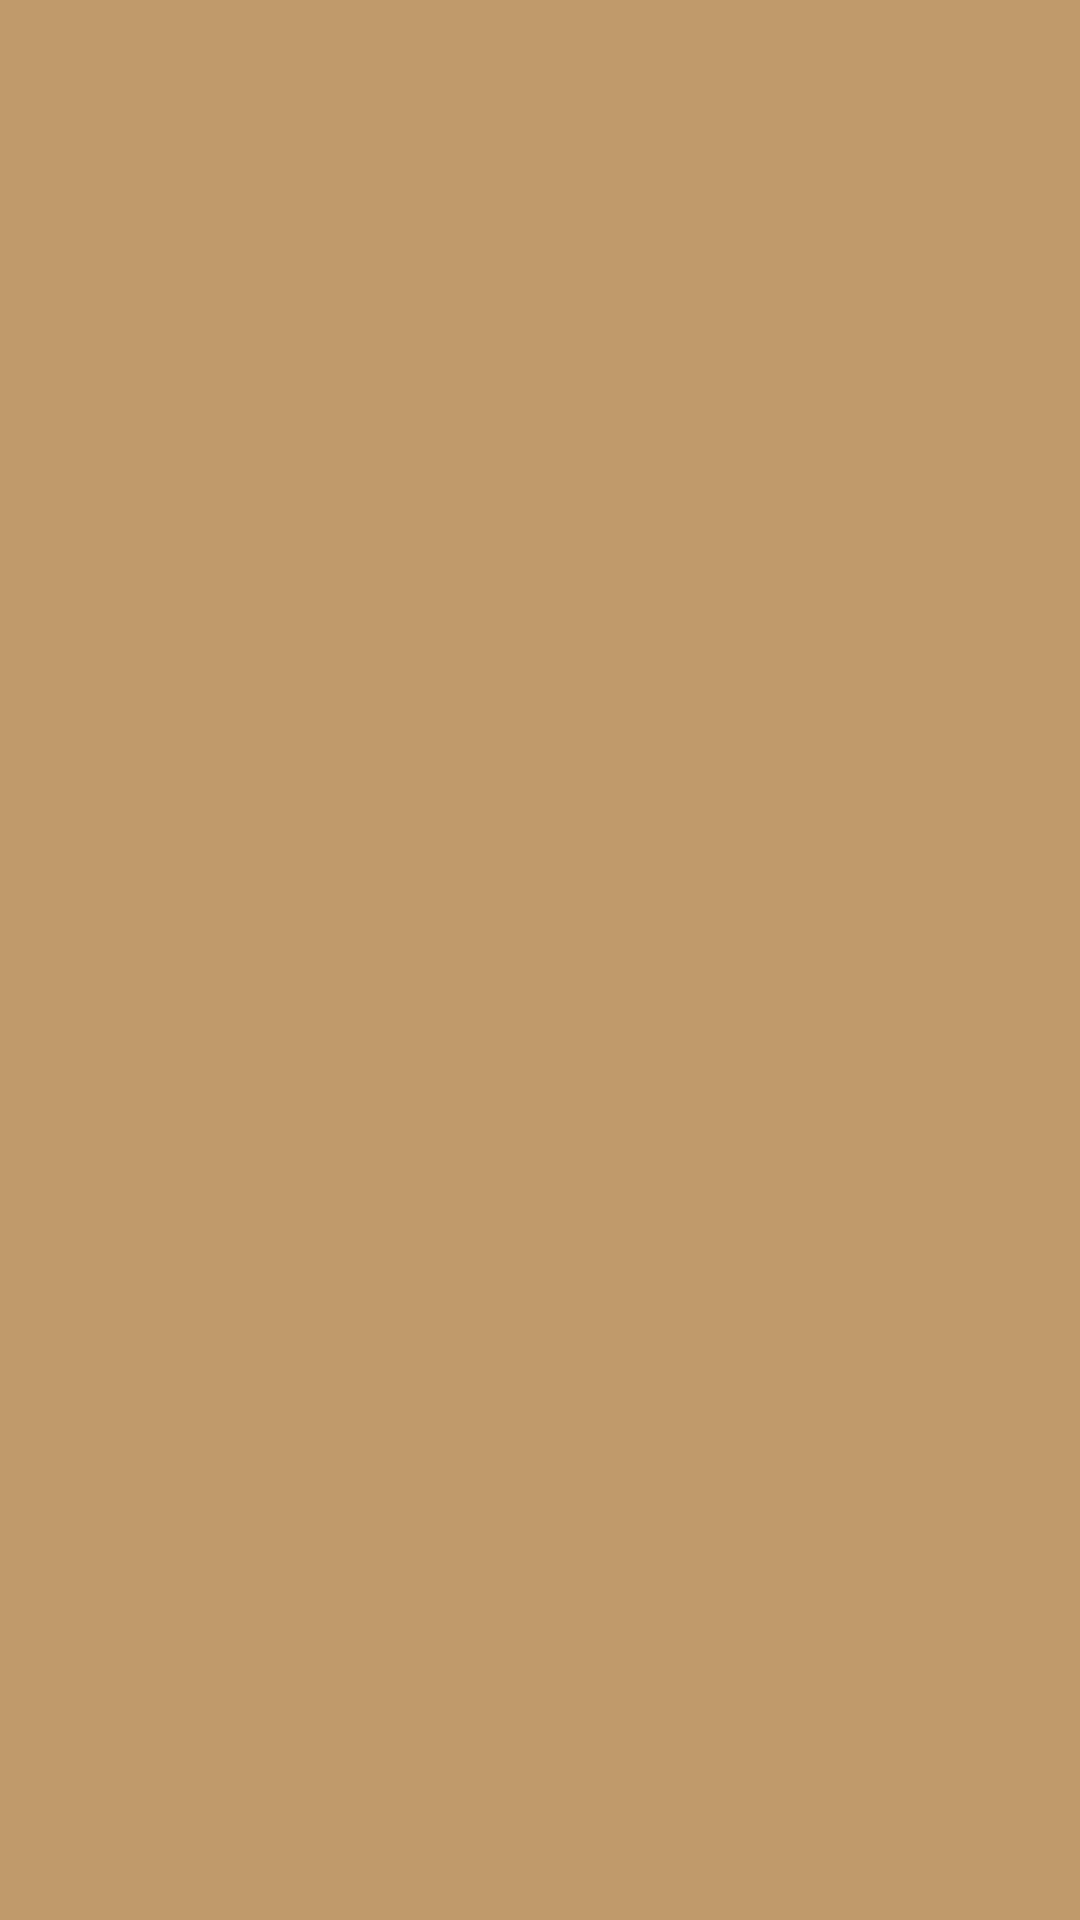 1080x1920 Camel Solid Color Background